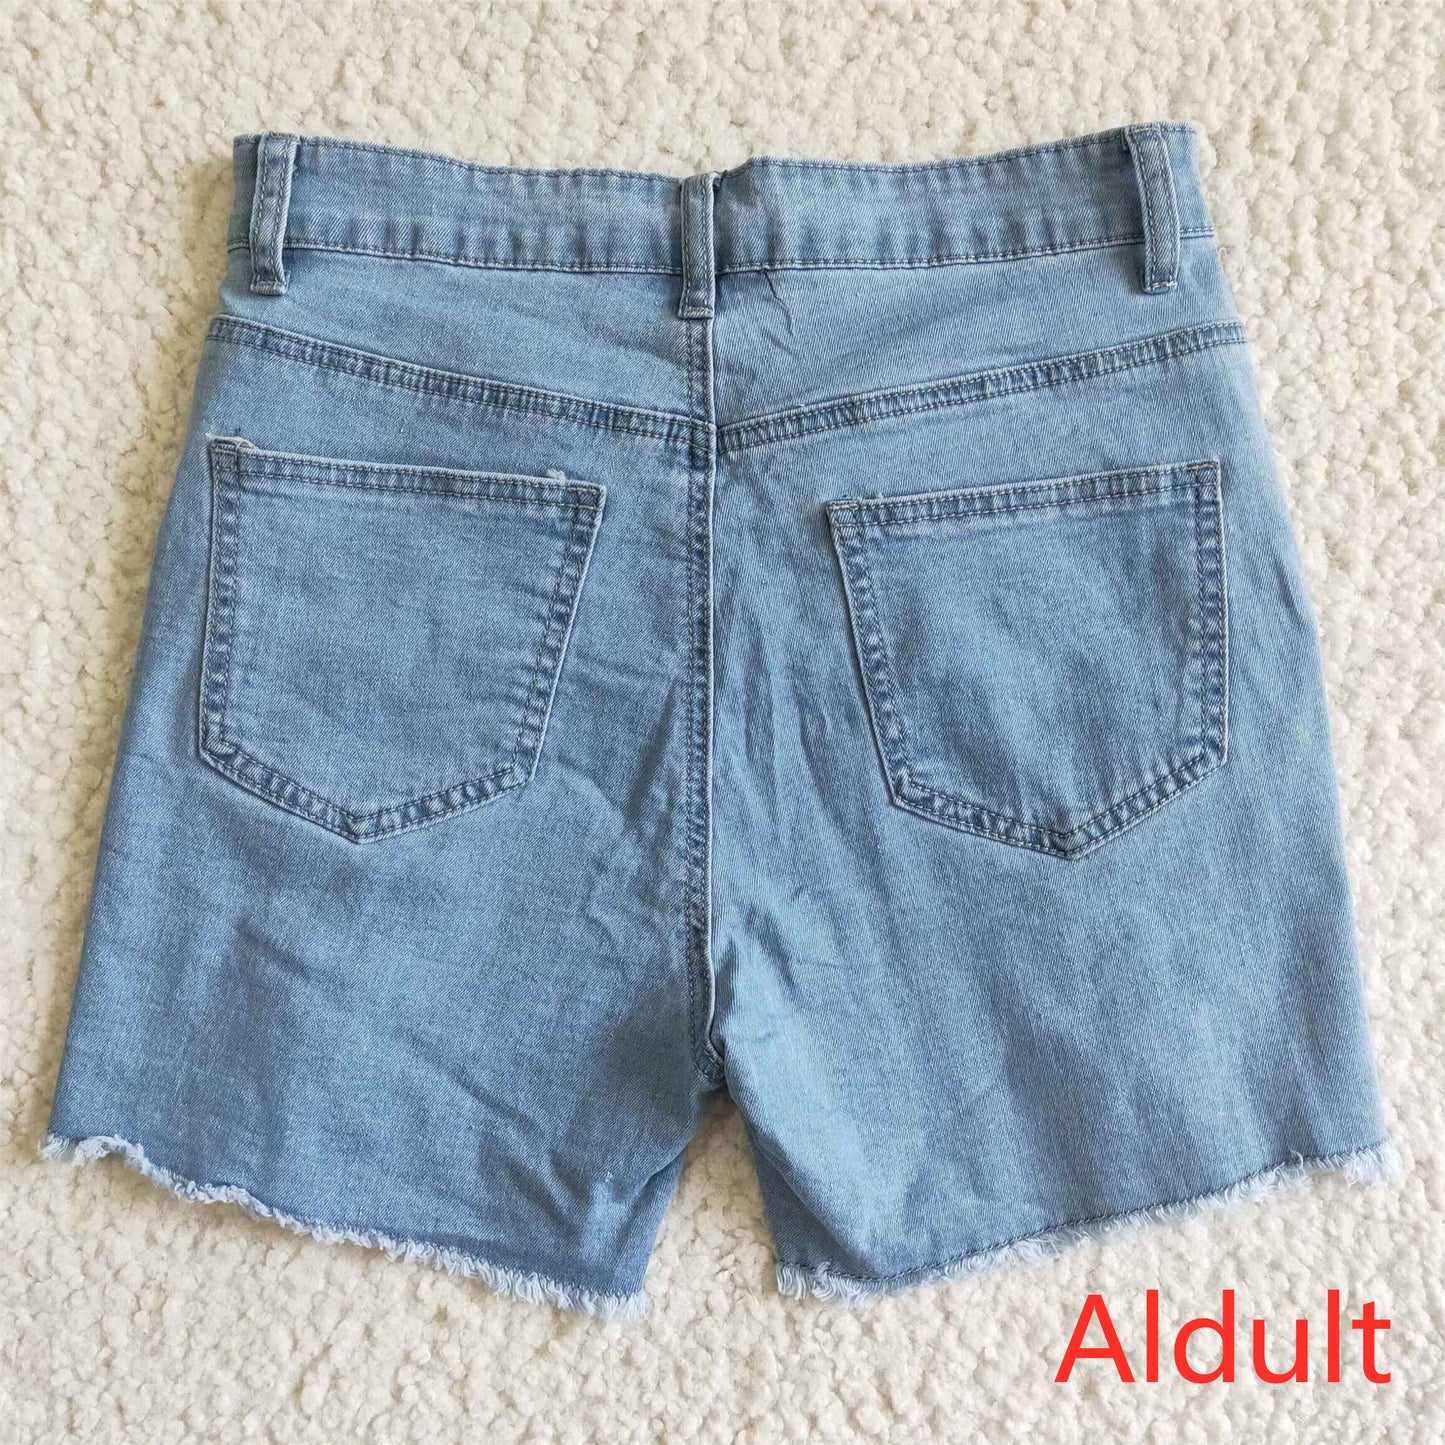 SS0026 Adult ripped denim shorts